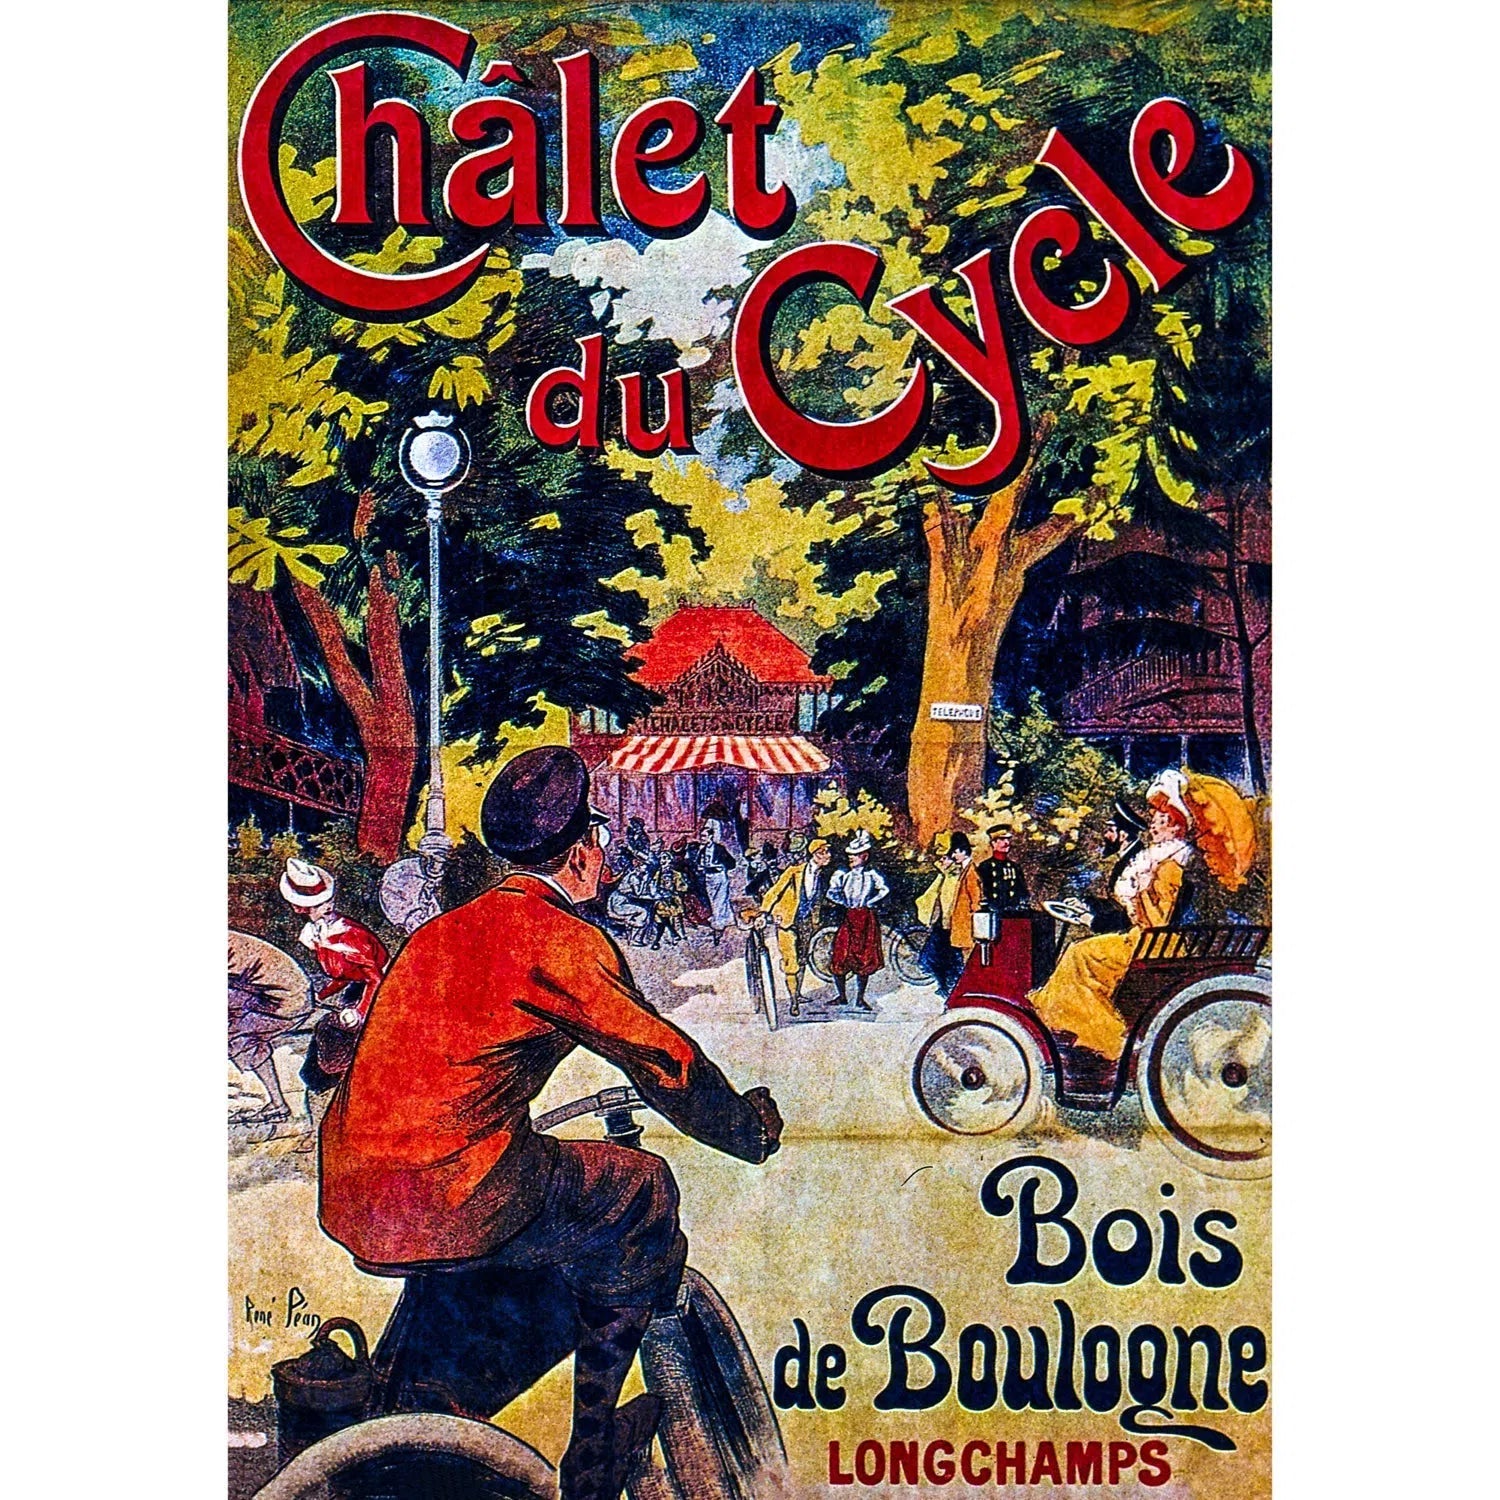 Chalet du cycle - Longchamps-Imagesdartistes